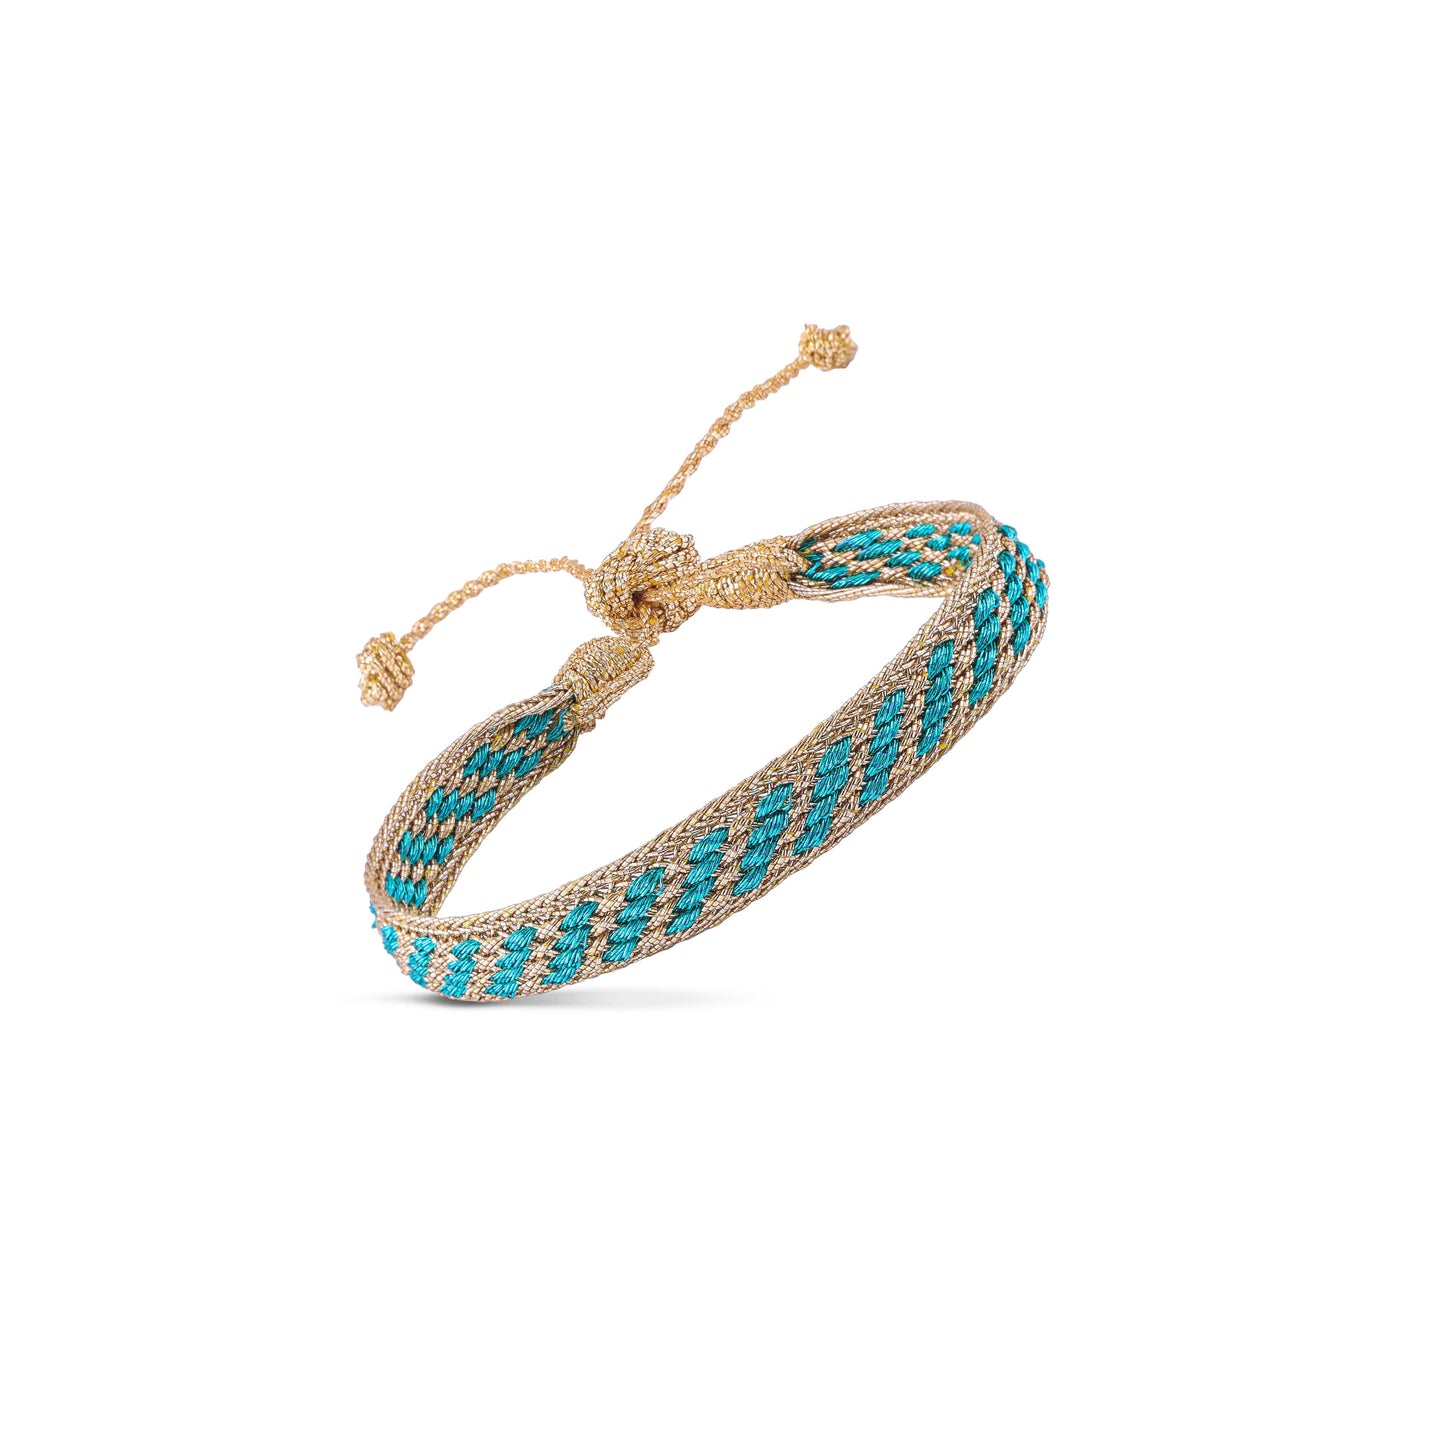 Izy n°2 Bracelet in Gold Tiffany Blue